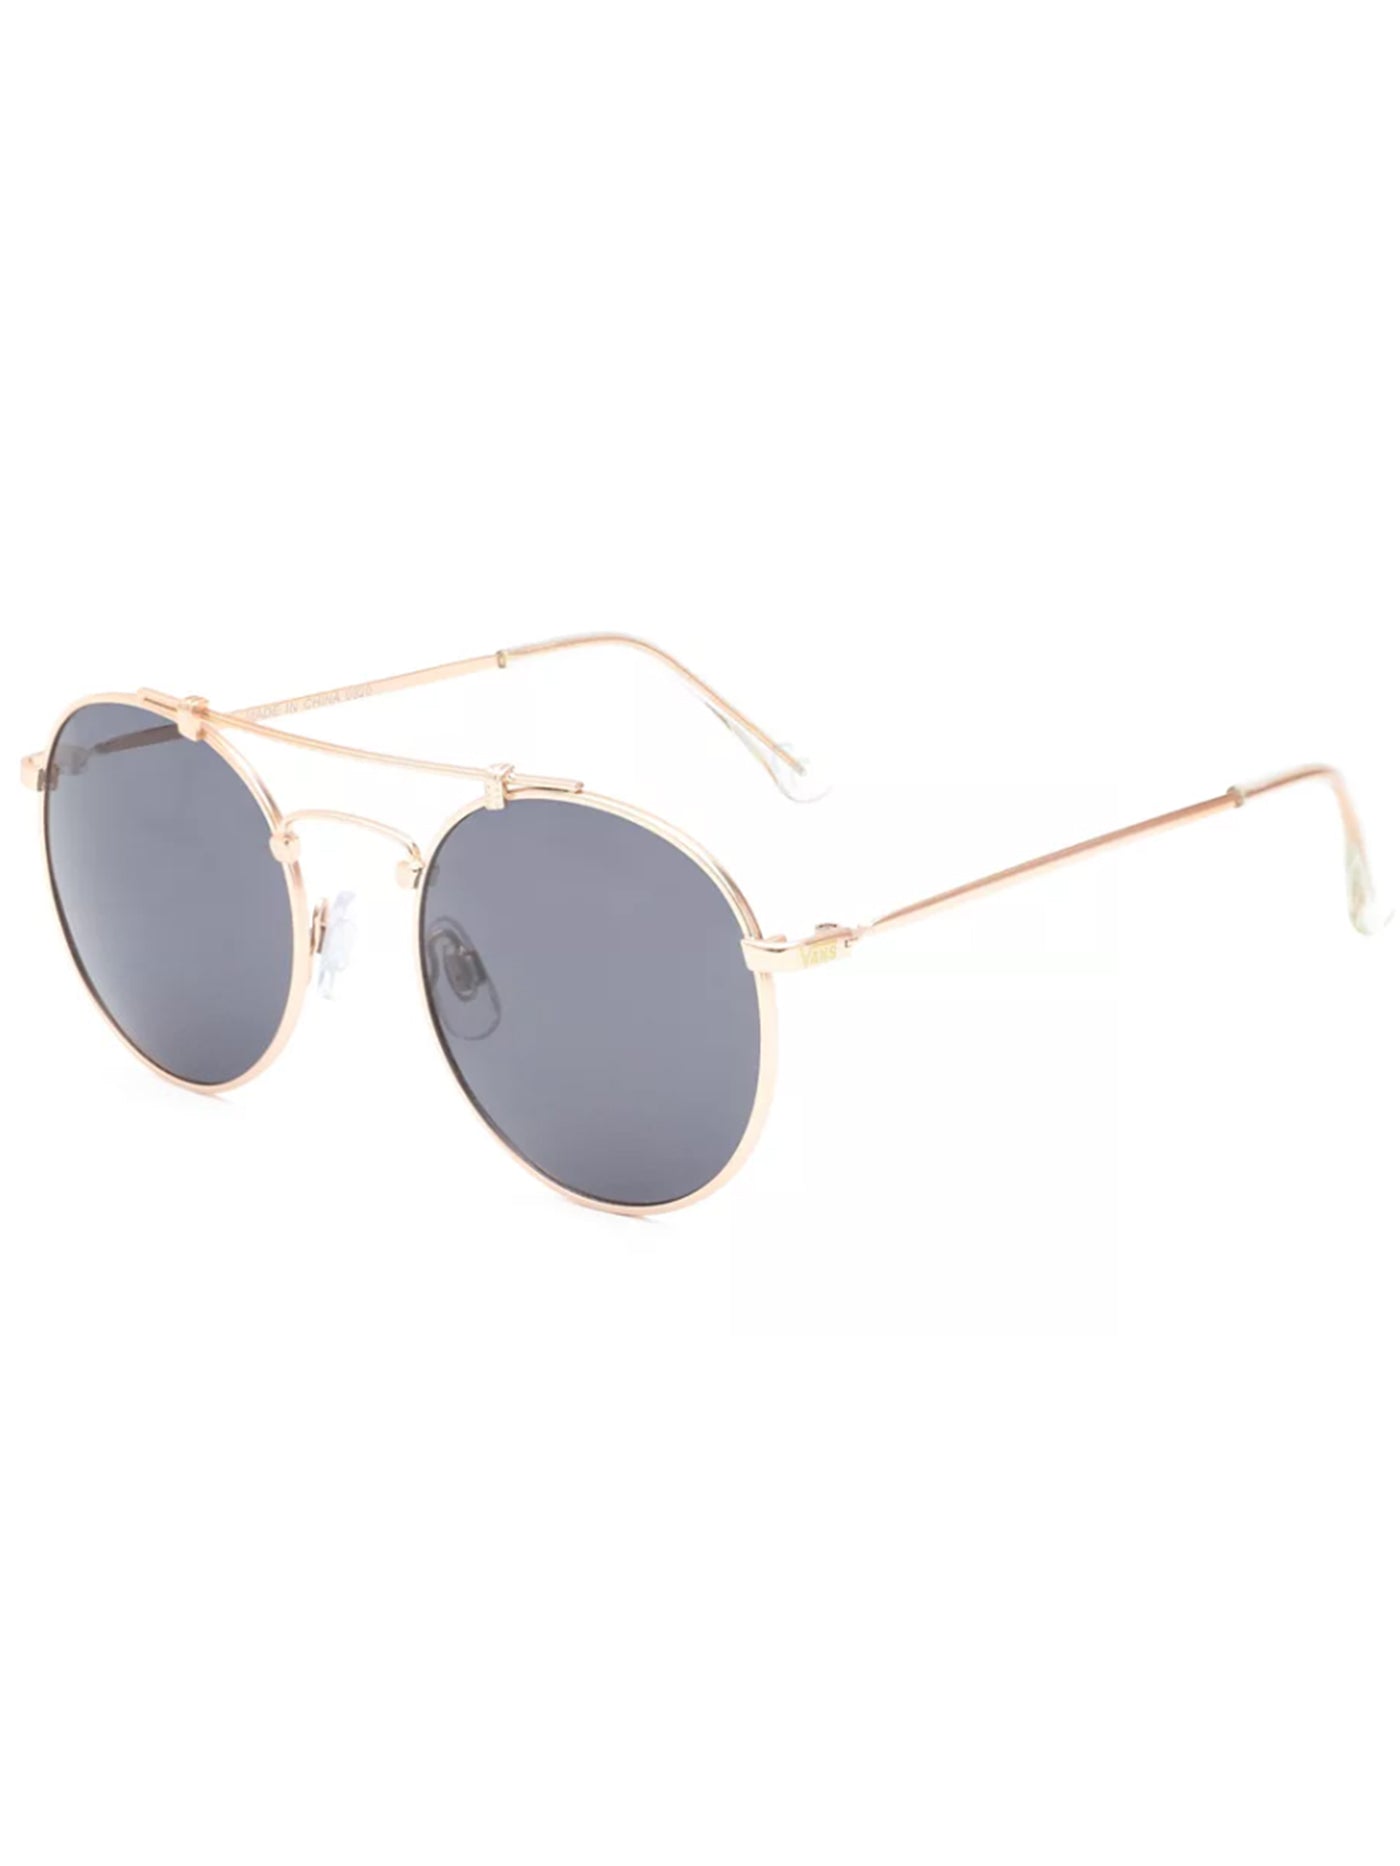 Vans Henderson Sunglasses | EMPIRE | Sonnenbrillen